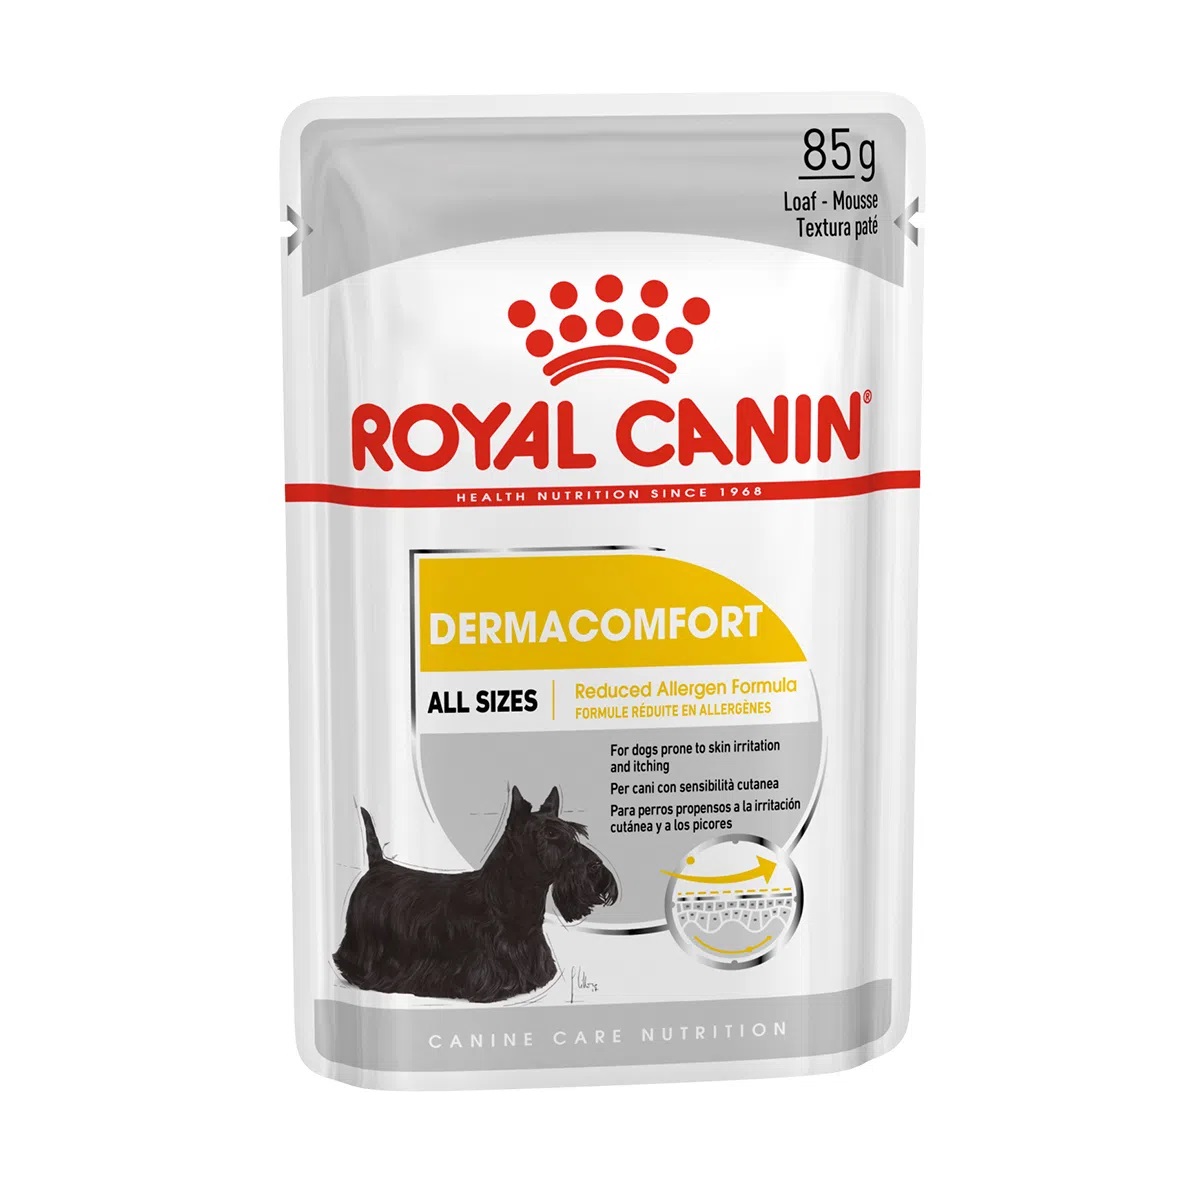 Image of Dermacomfort Royal Canin 85g